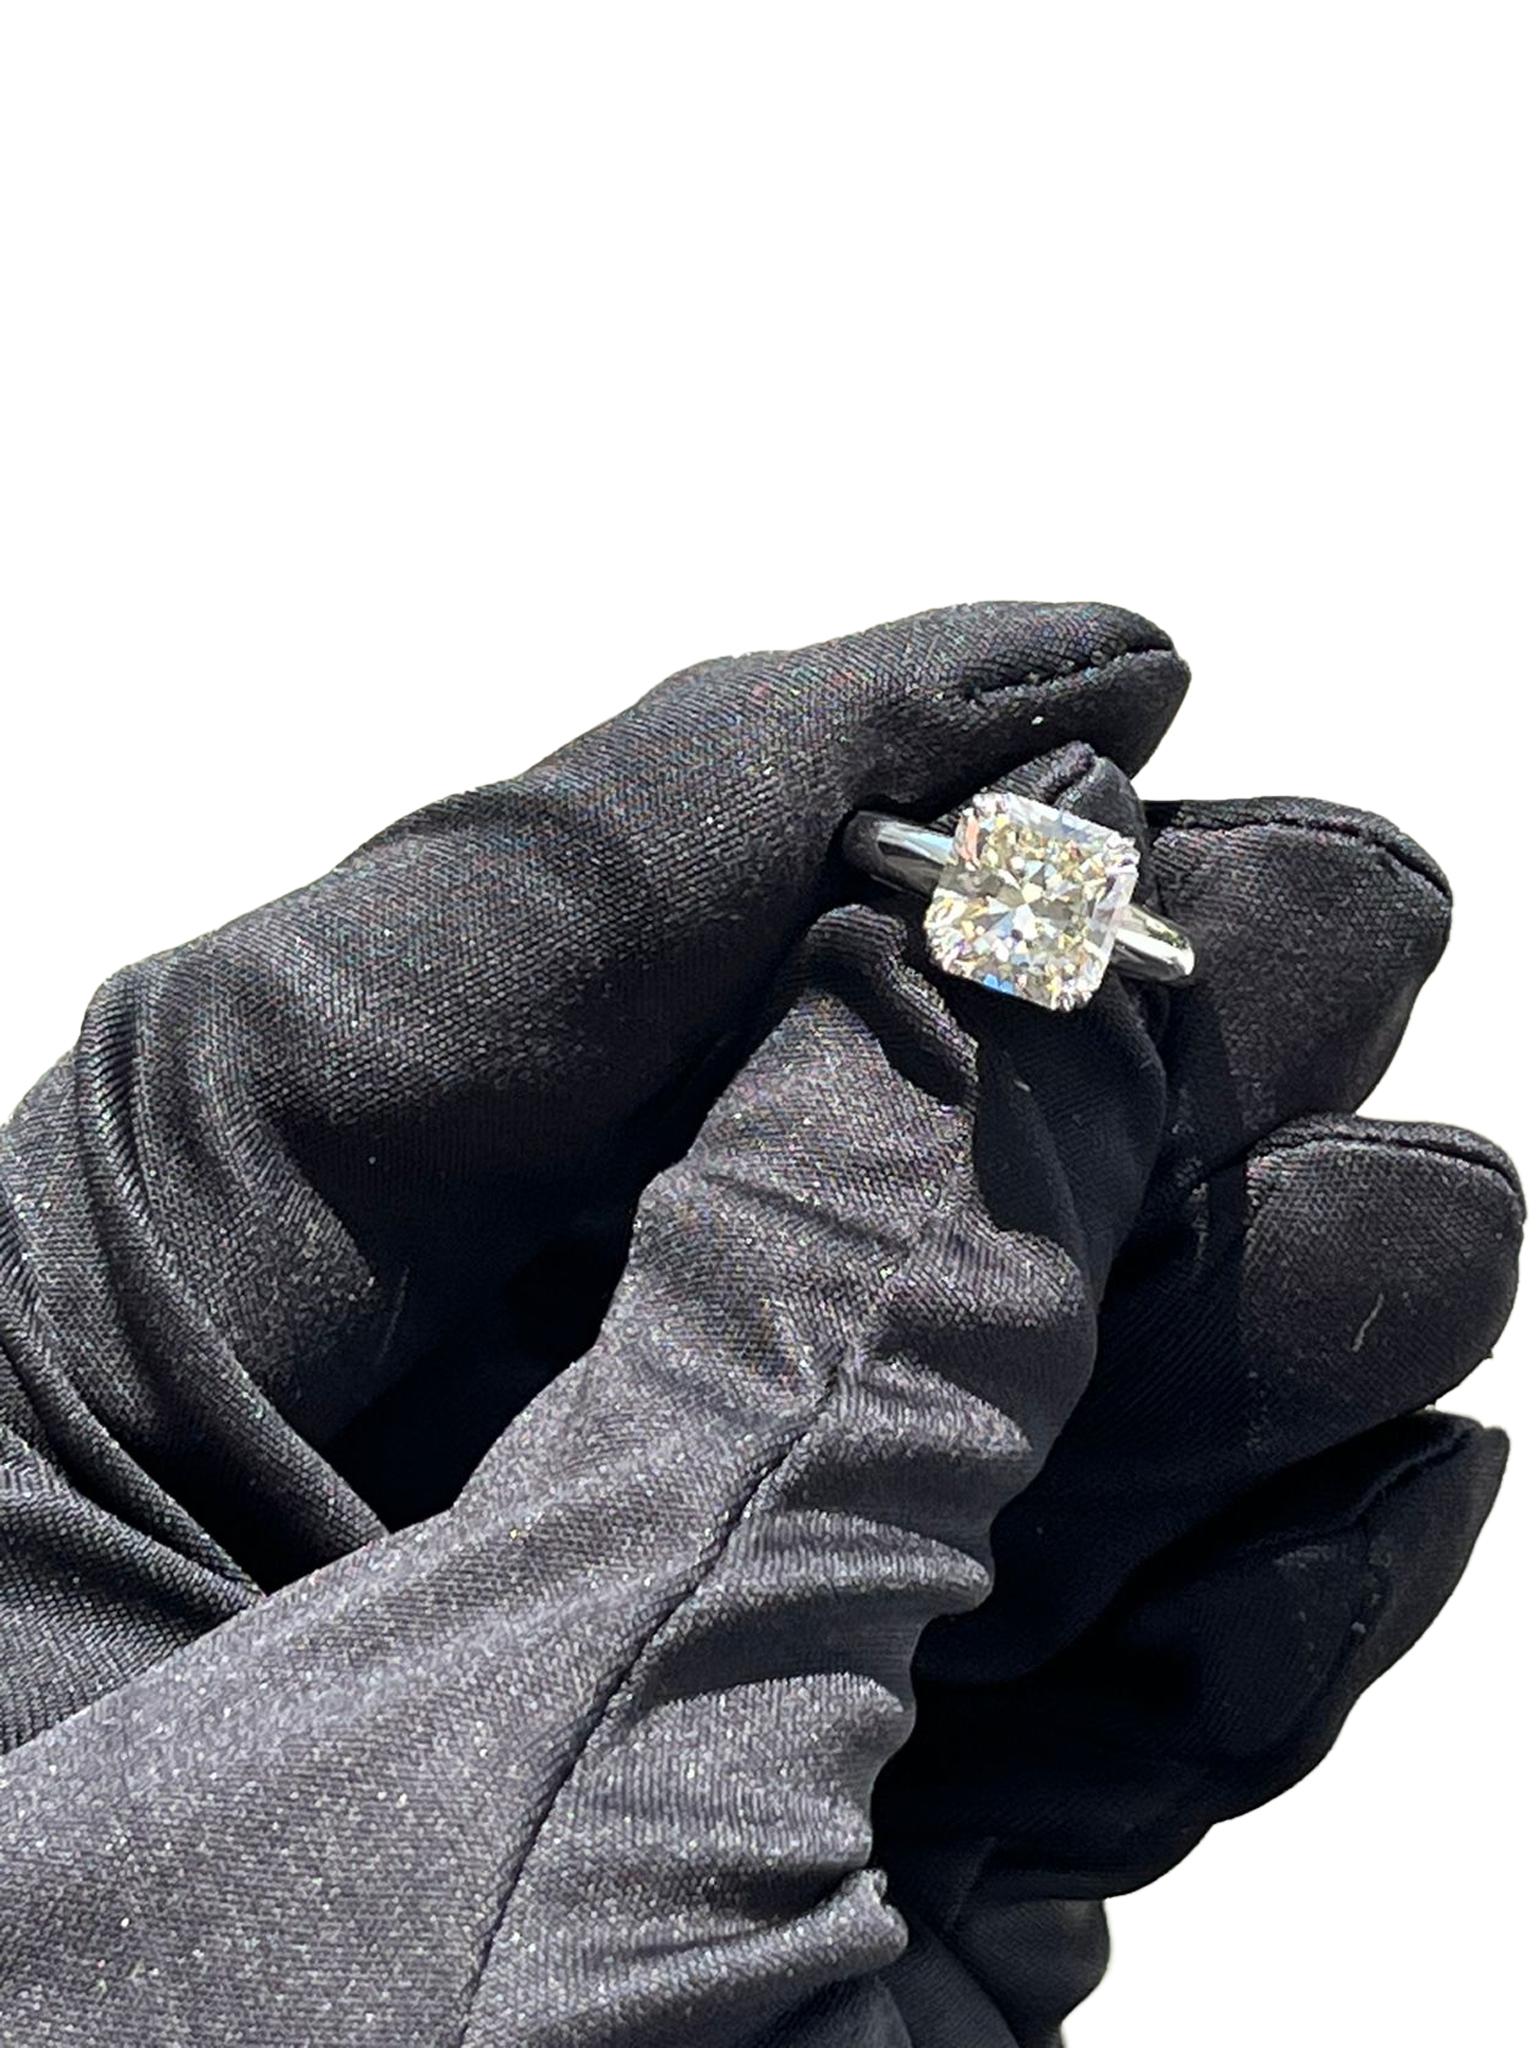 4.28 Carat Natural Square Radiant Cut Diamond Engagement Ring in Platinum For Sale 8